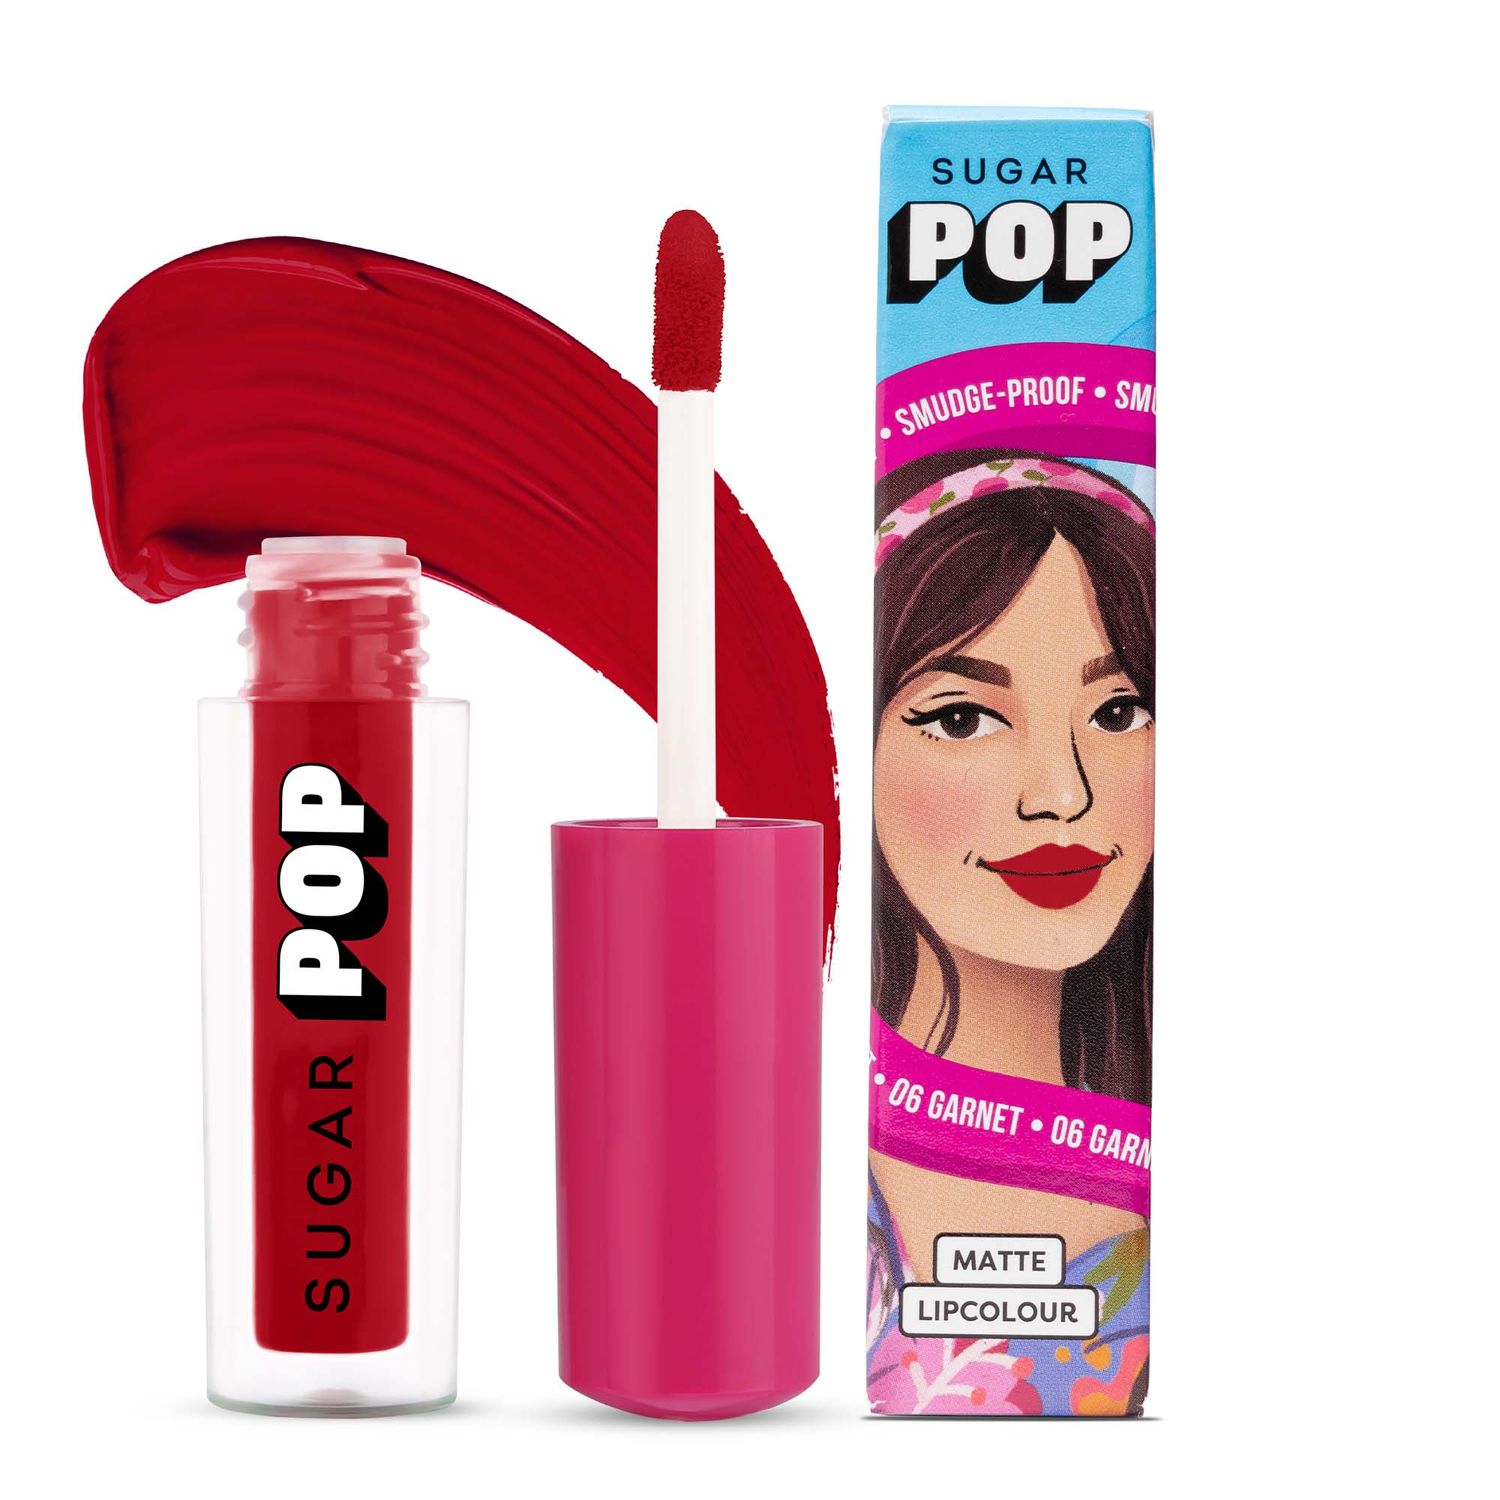 Buy SUGAR POP MatteA  Lipcolour - 06 Garnet (Wine) a€“ 1.6 ml l RedA  Lipstick for Women l  Smudge Proof - Purplle